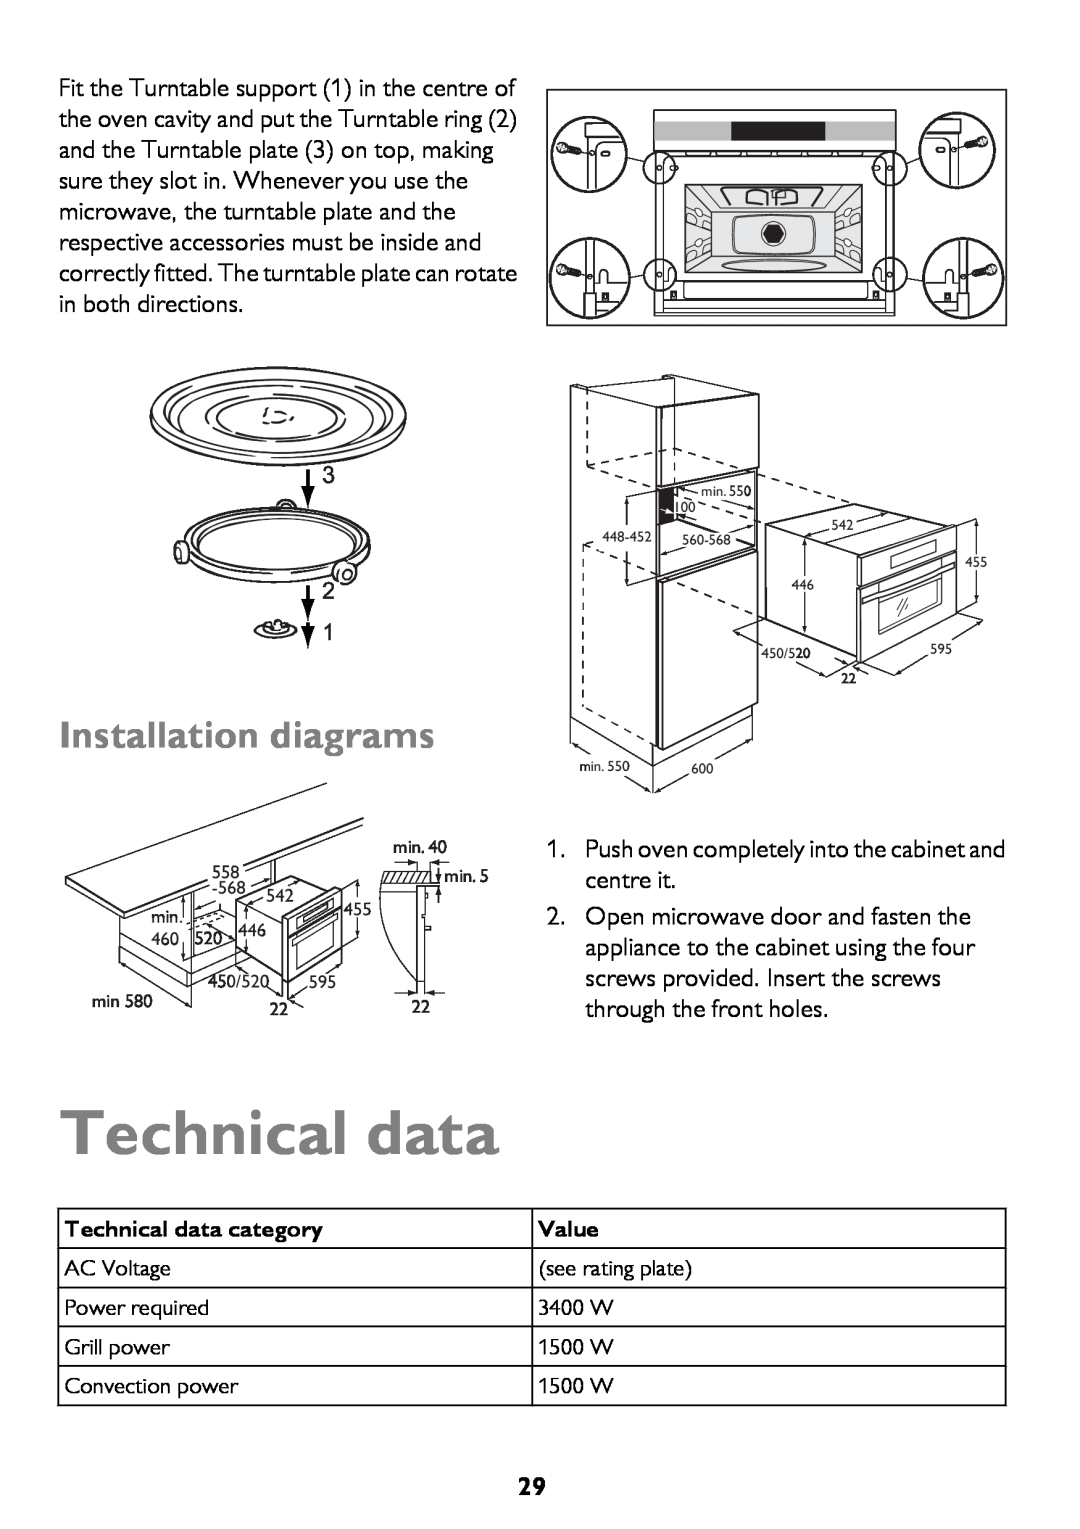 John Lewis JLBICO2 instruction manual Technical data, Installation diagrams 